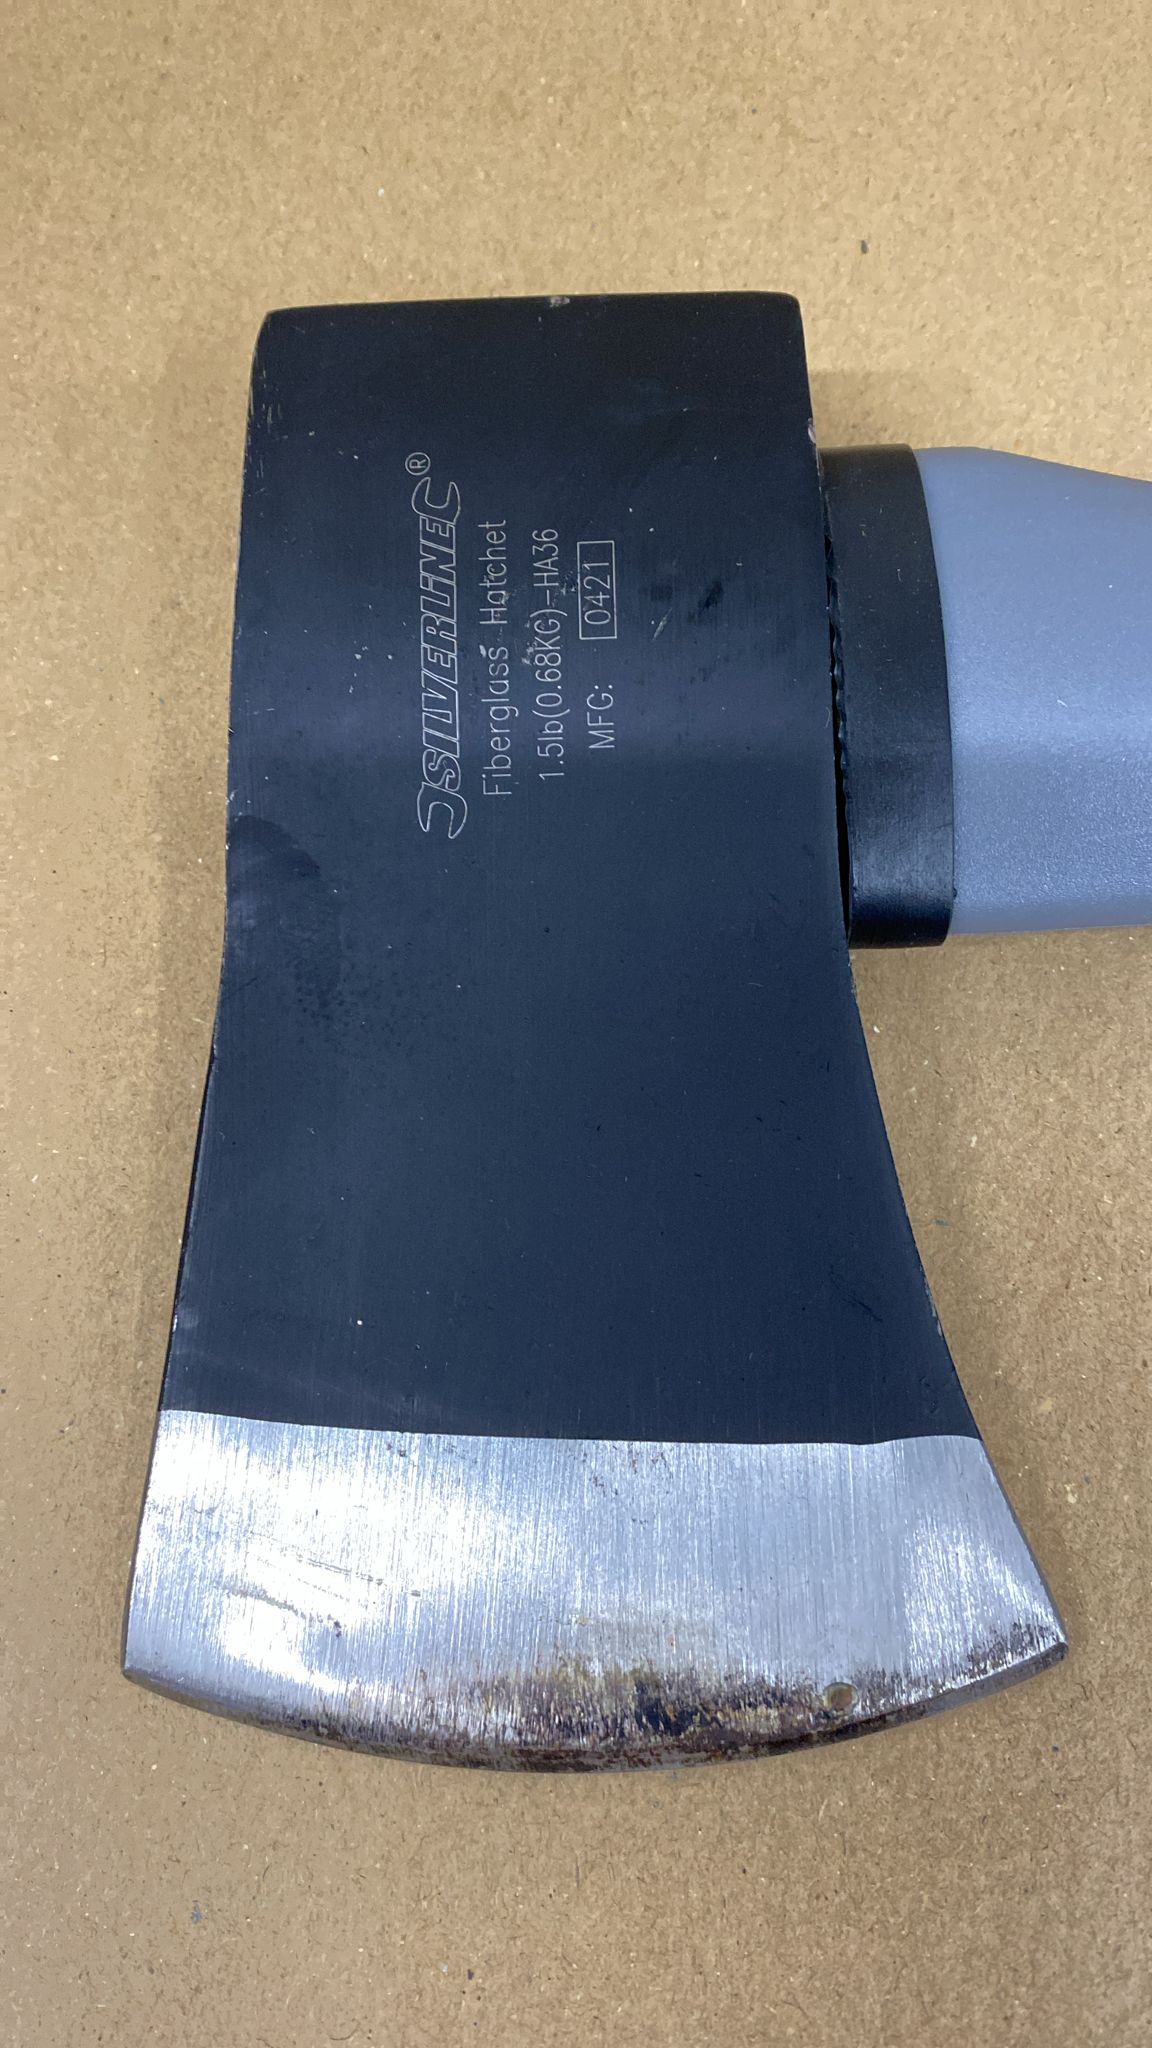 Silverline Hatchet Fibreglass 1.5 lb (0.68 kg) (HA36),Blue-9885